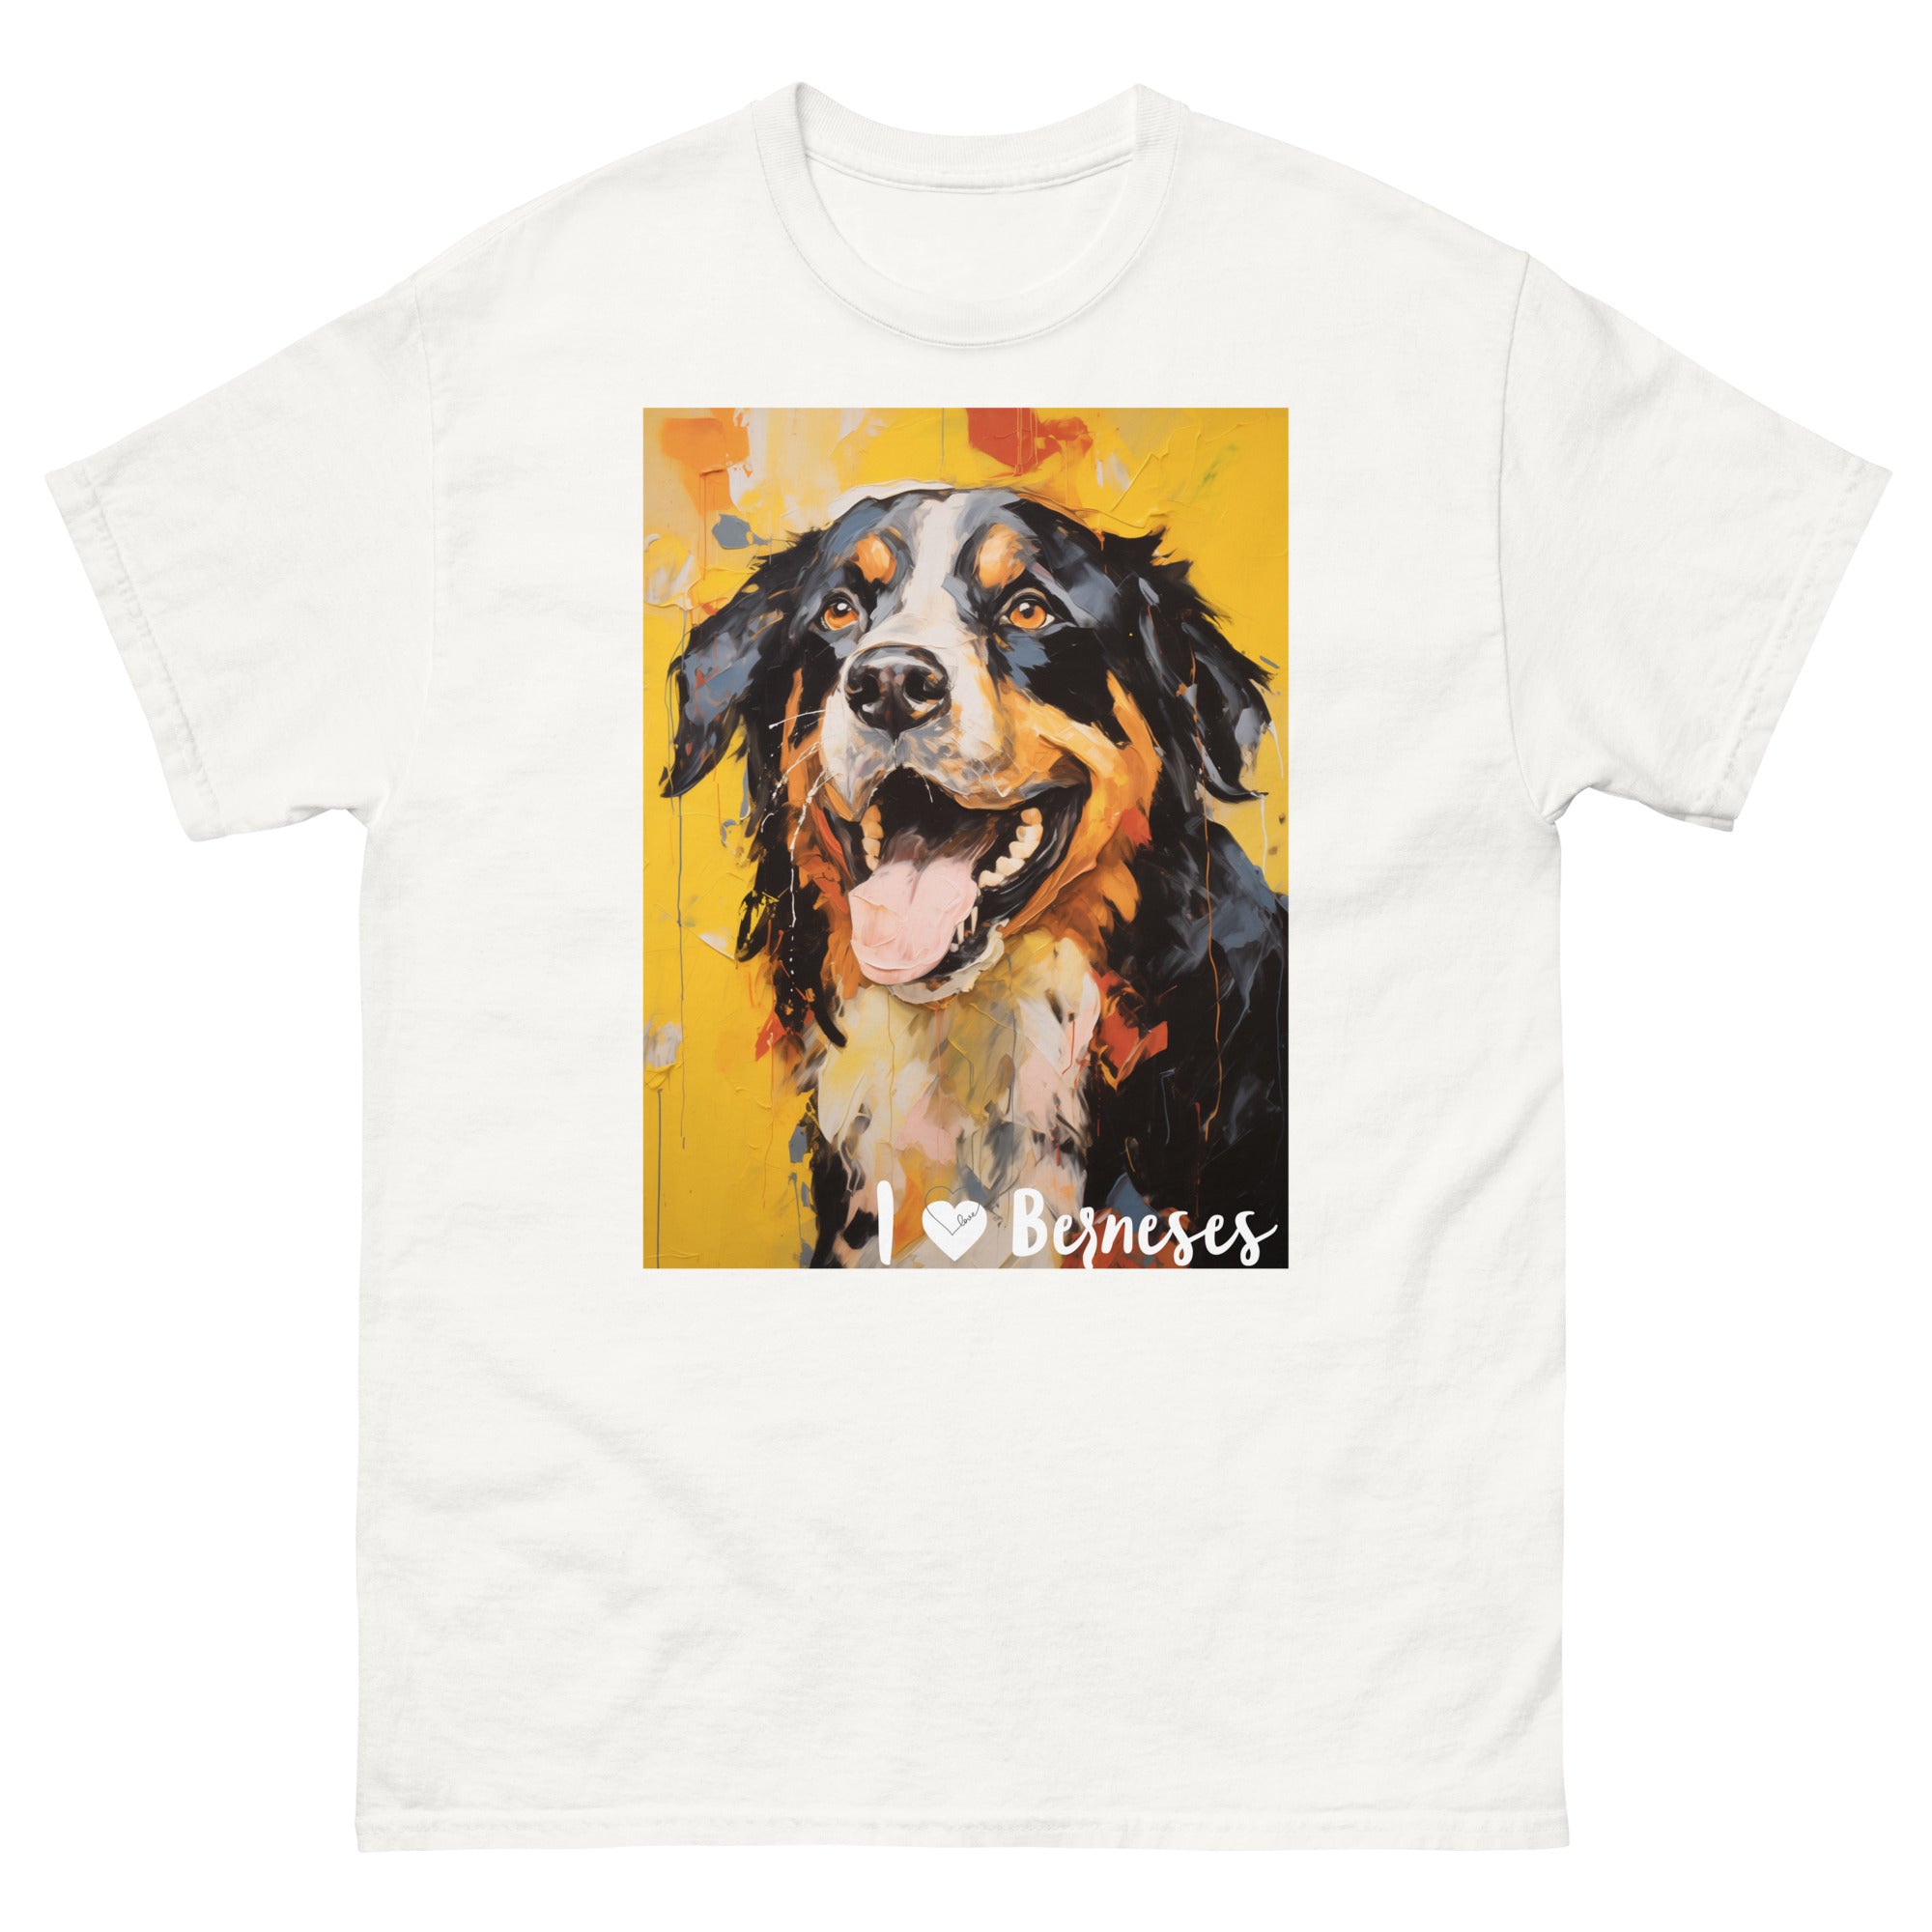 Men's classic tee - I ❤ DOGS - Bernese Mountain Dog